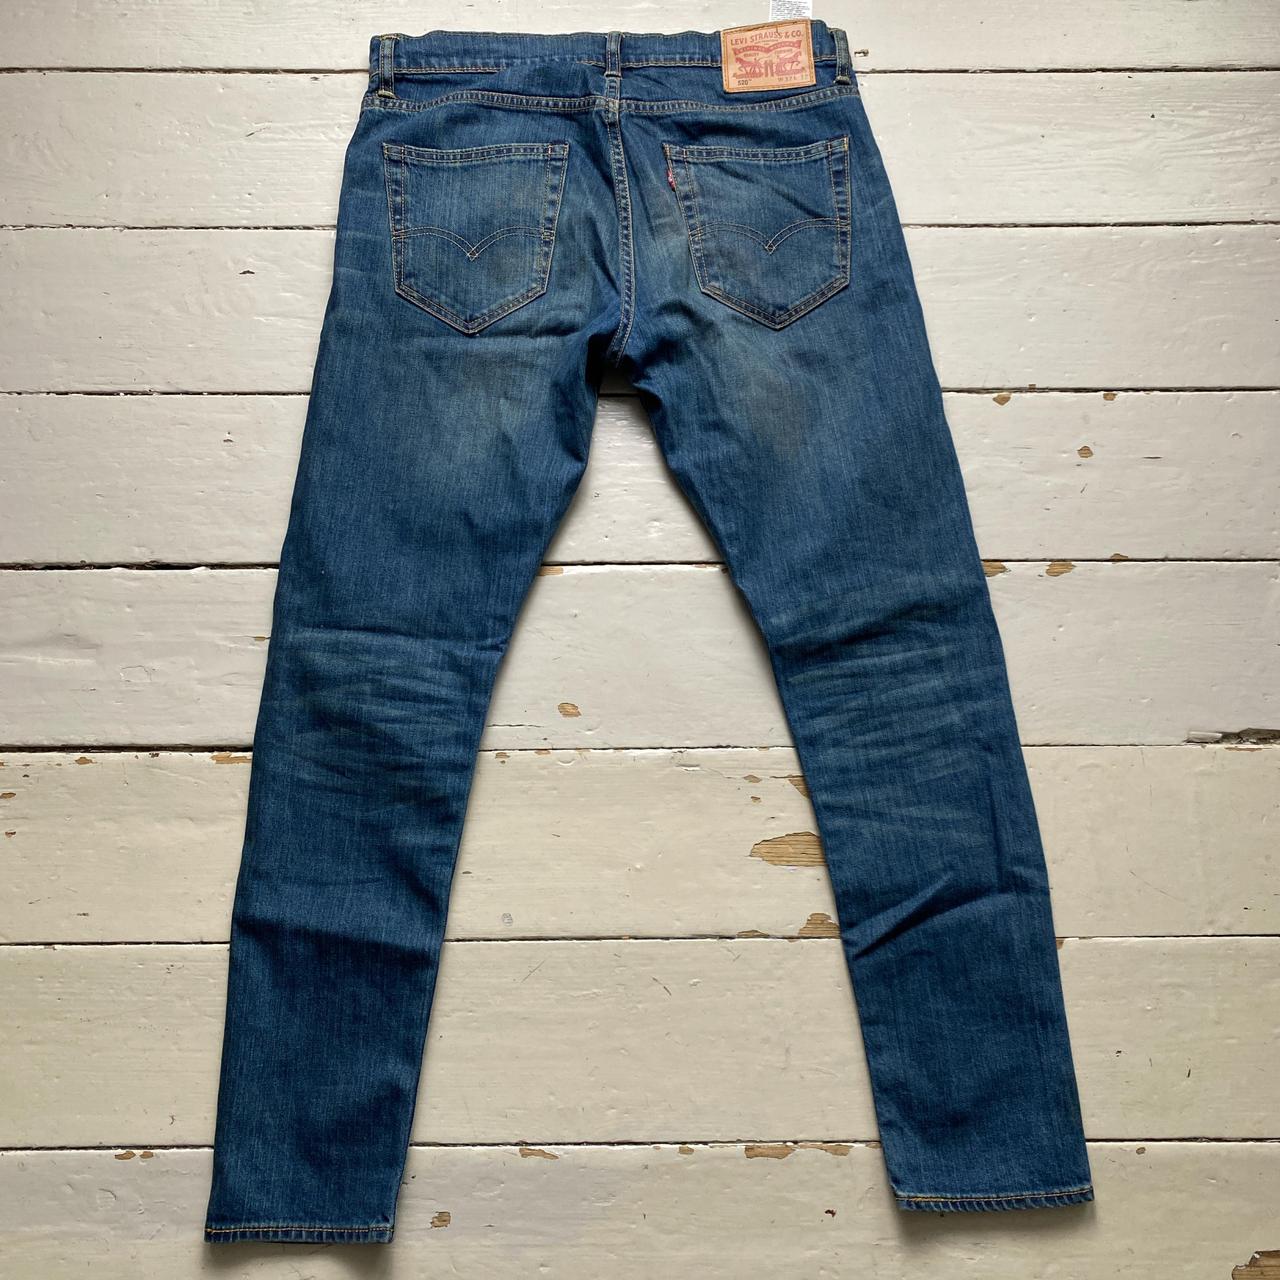 Levis 520 Navy Stonewash Jeans